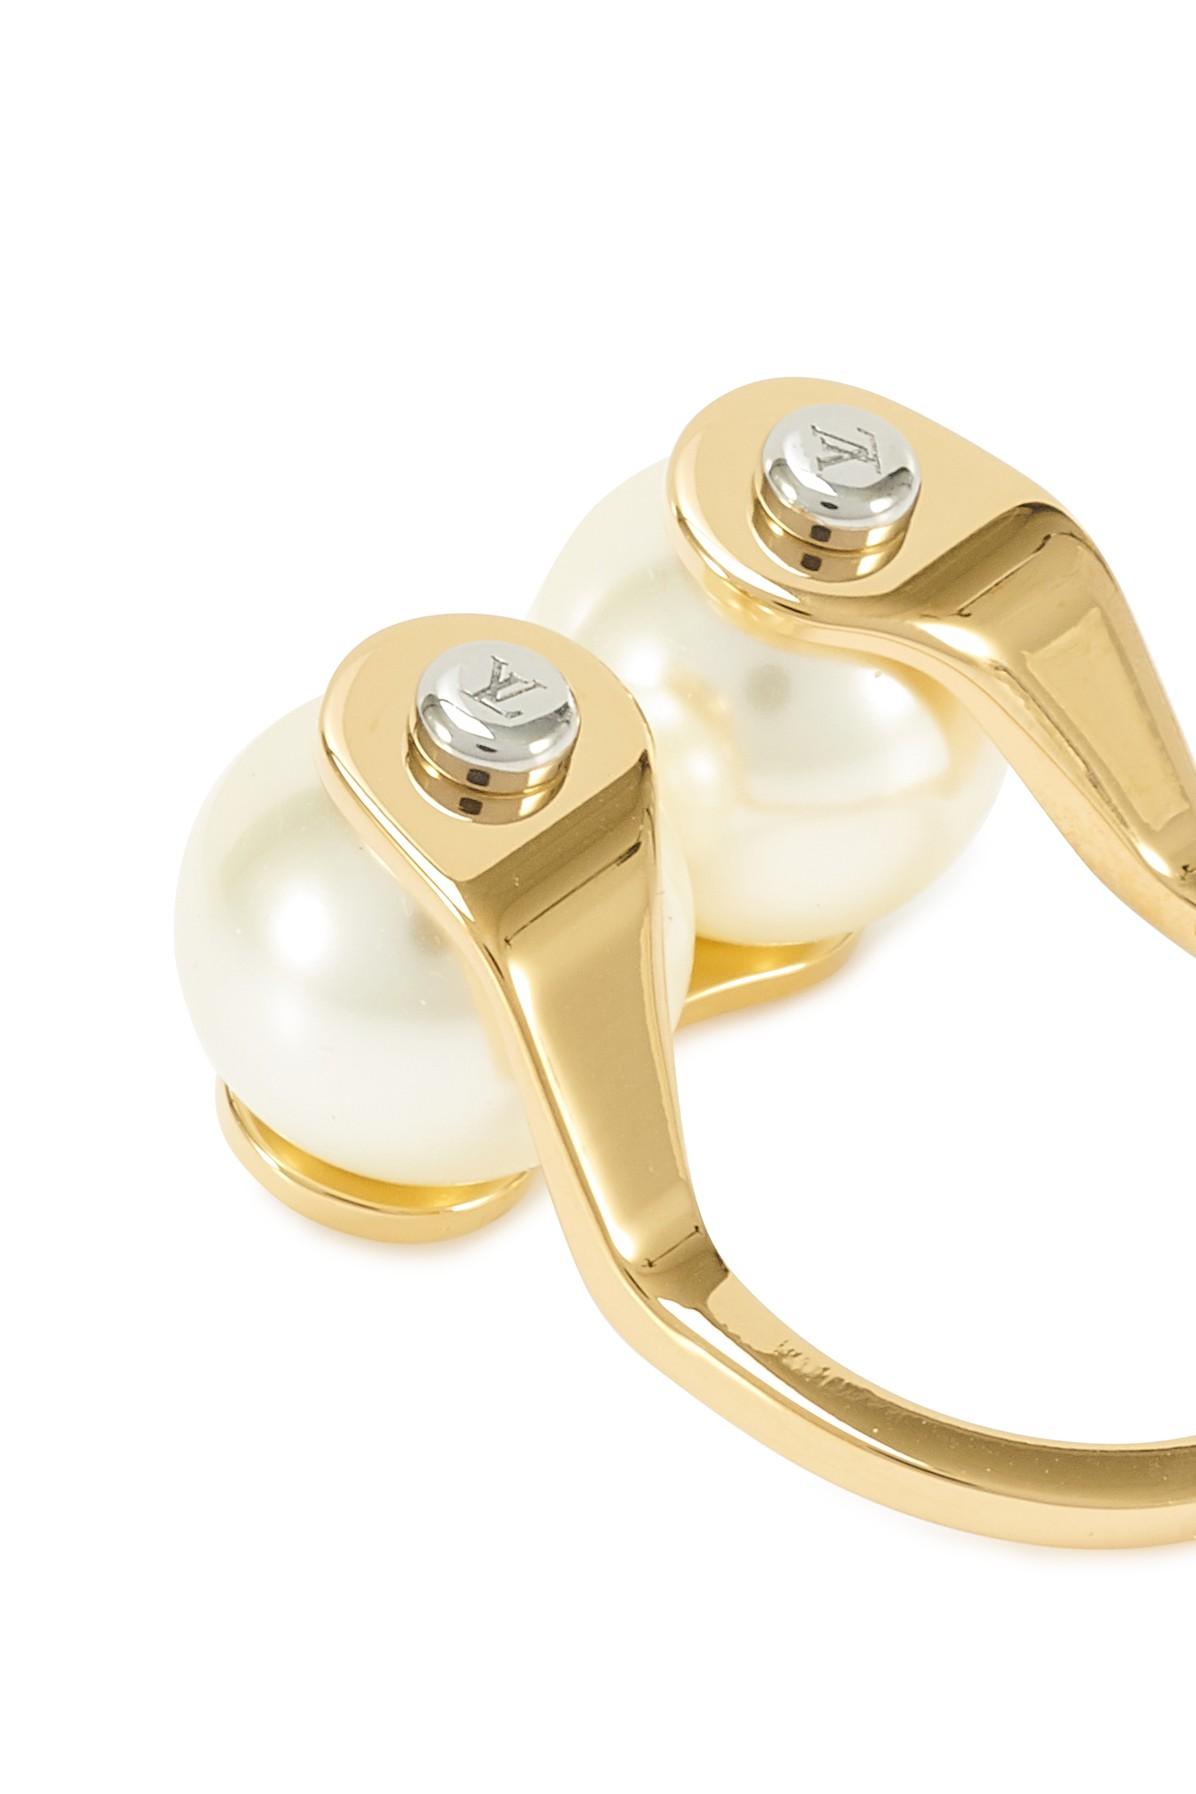 LV Damier Ring & Monogram Pearls Review : r/DHgate